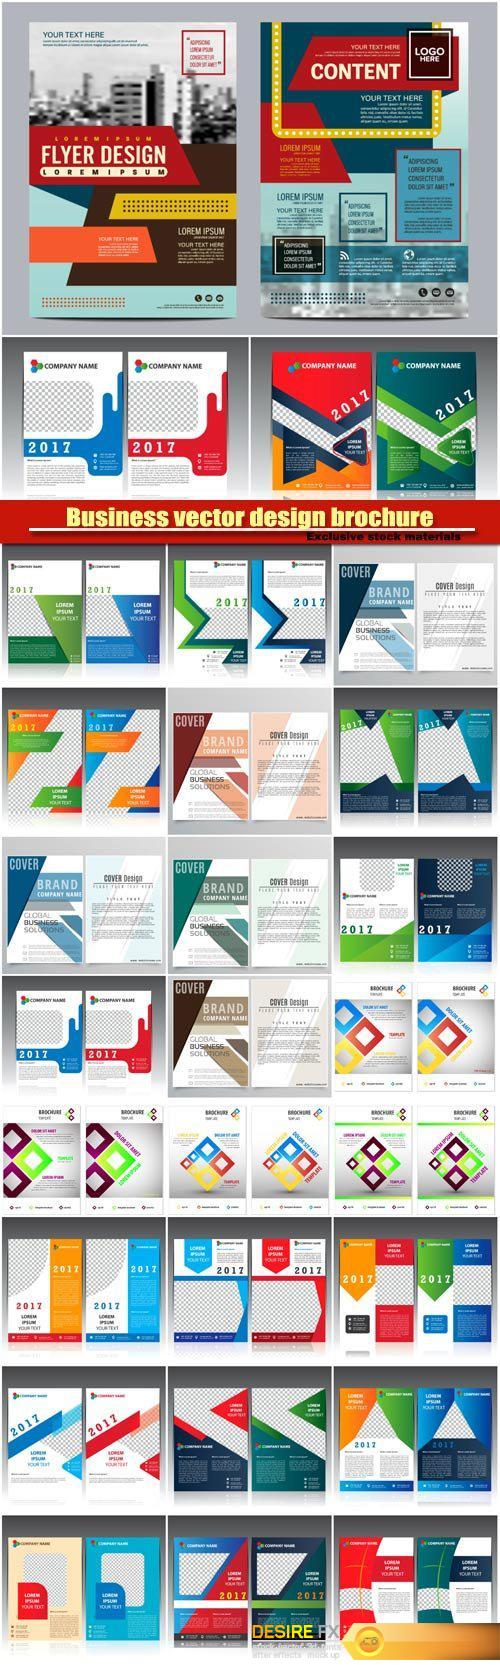 Business vector design brochure, creative flyer template